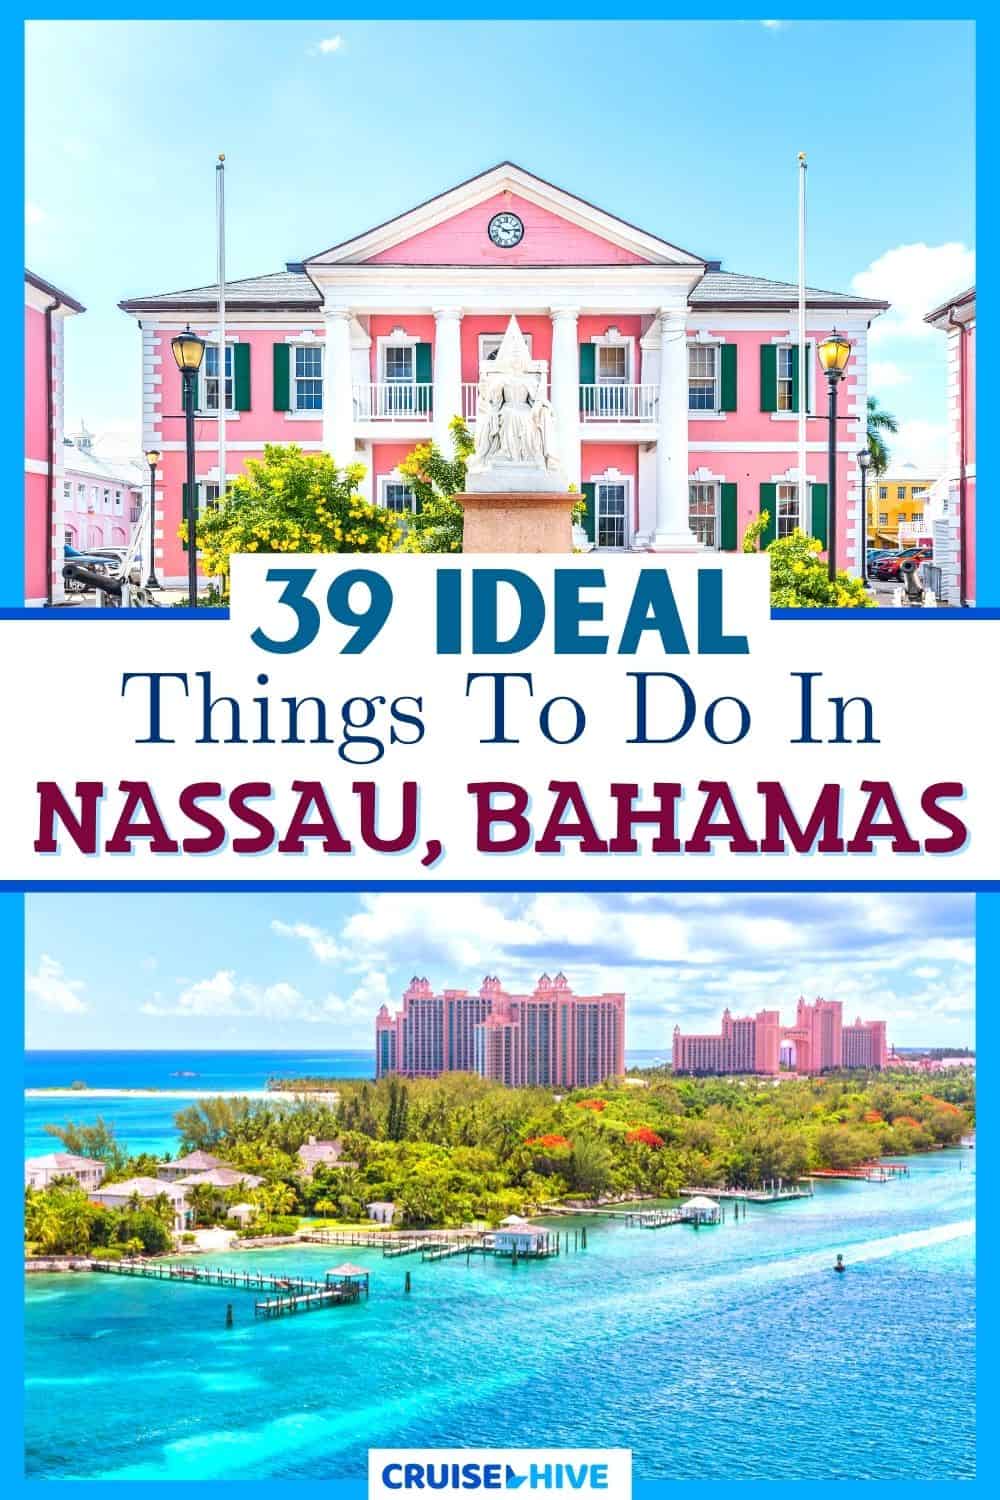 Things To Do In Nassau, Bahamas